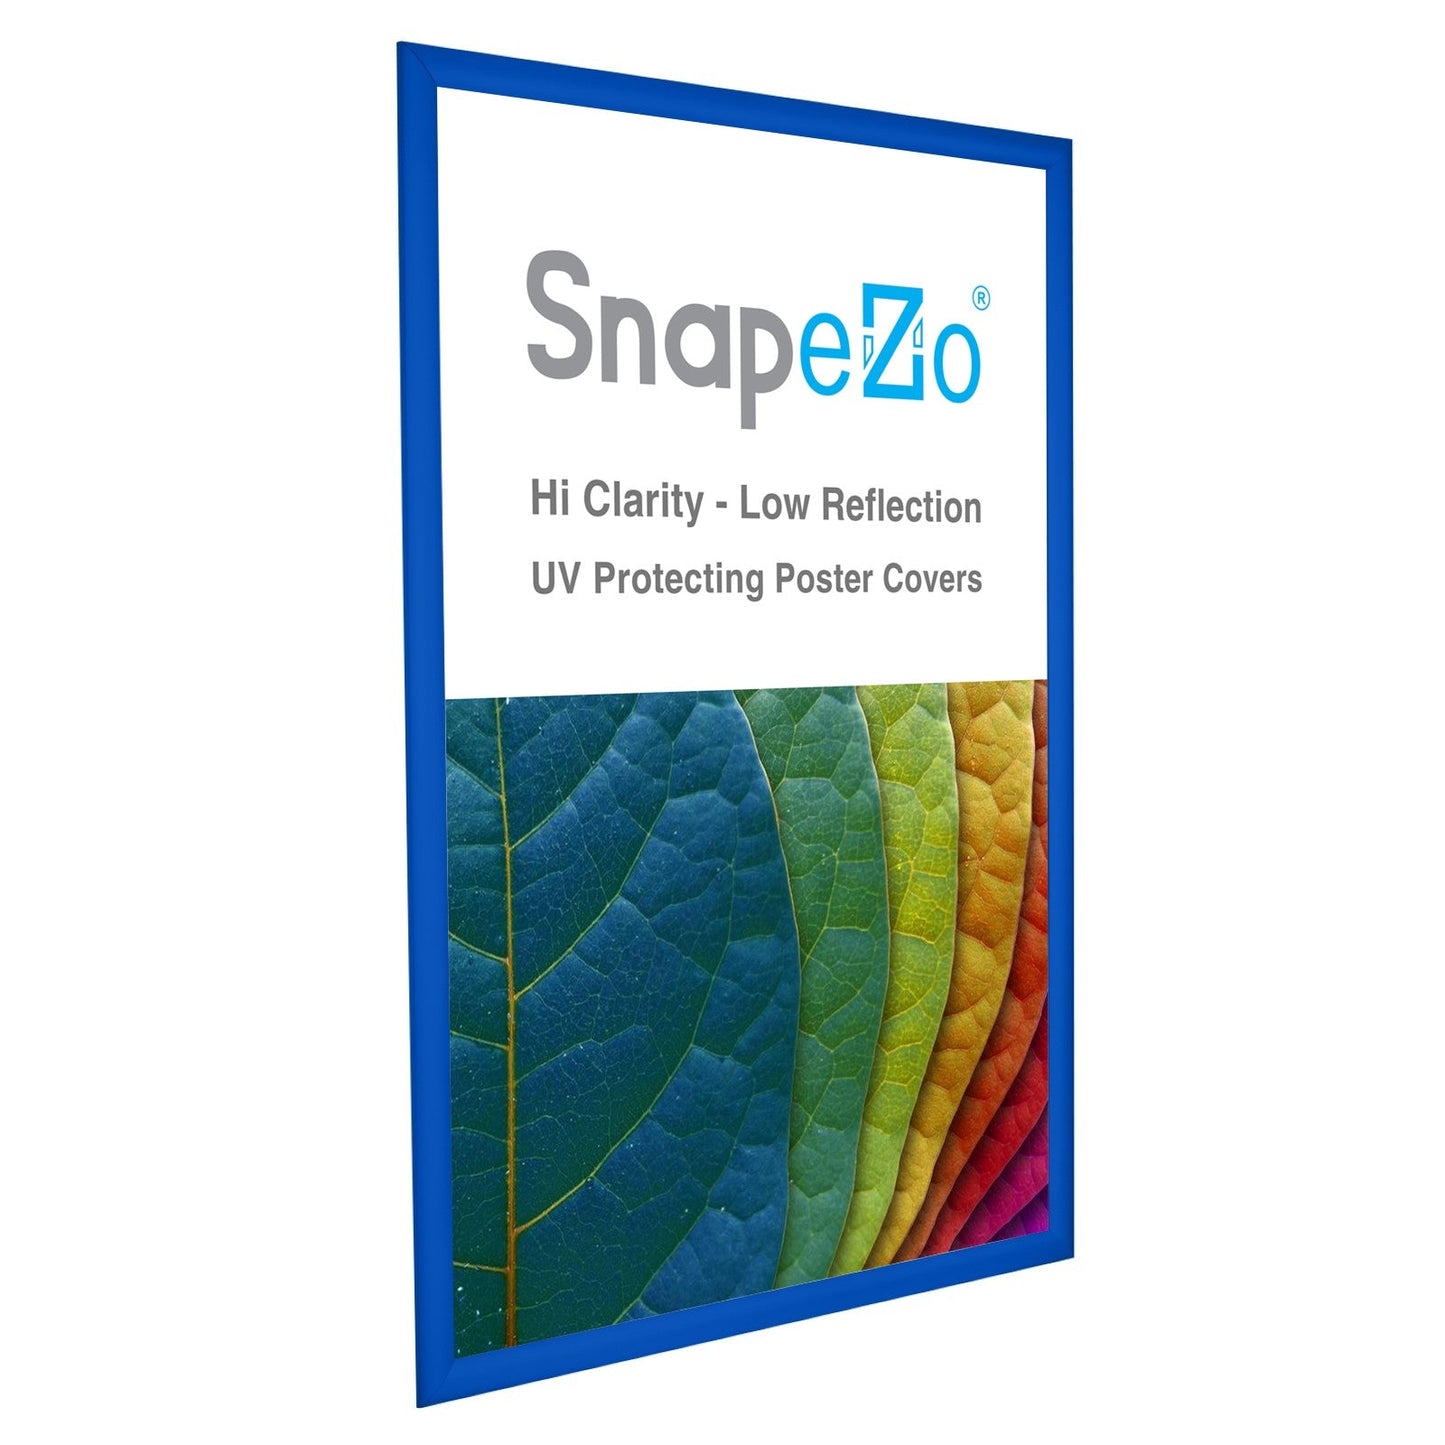 22x34 Blue SnapeZo® Snap Frame - 1.2" Profile